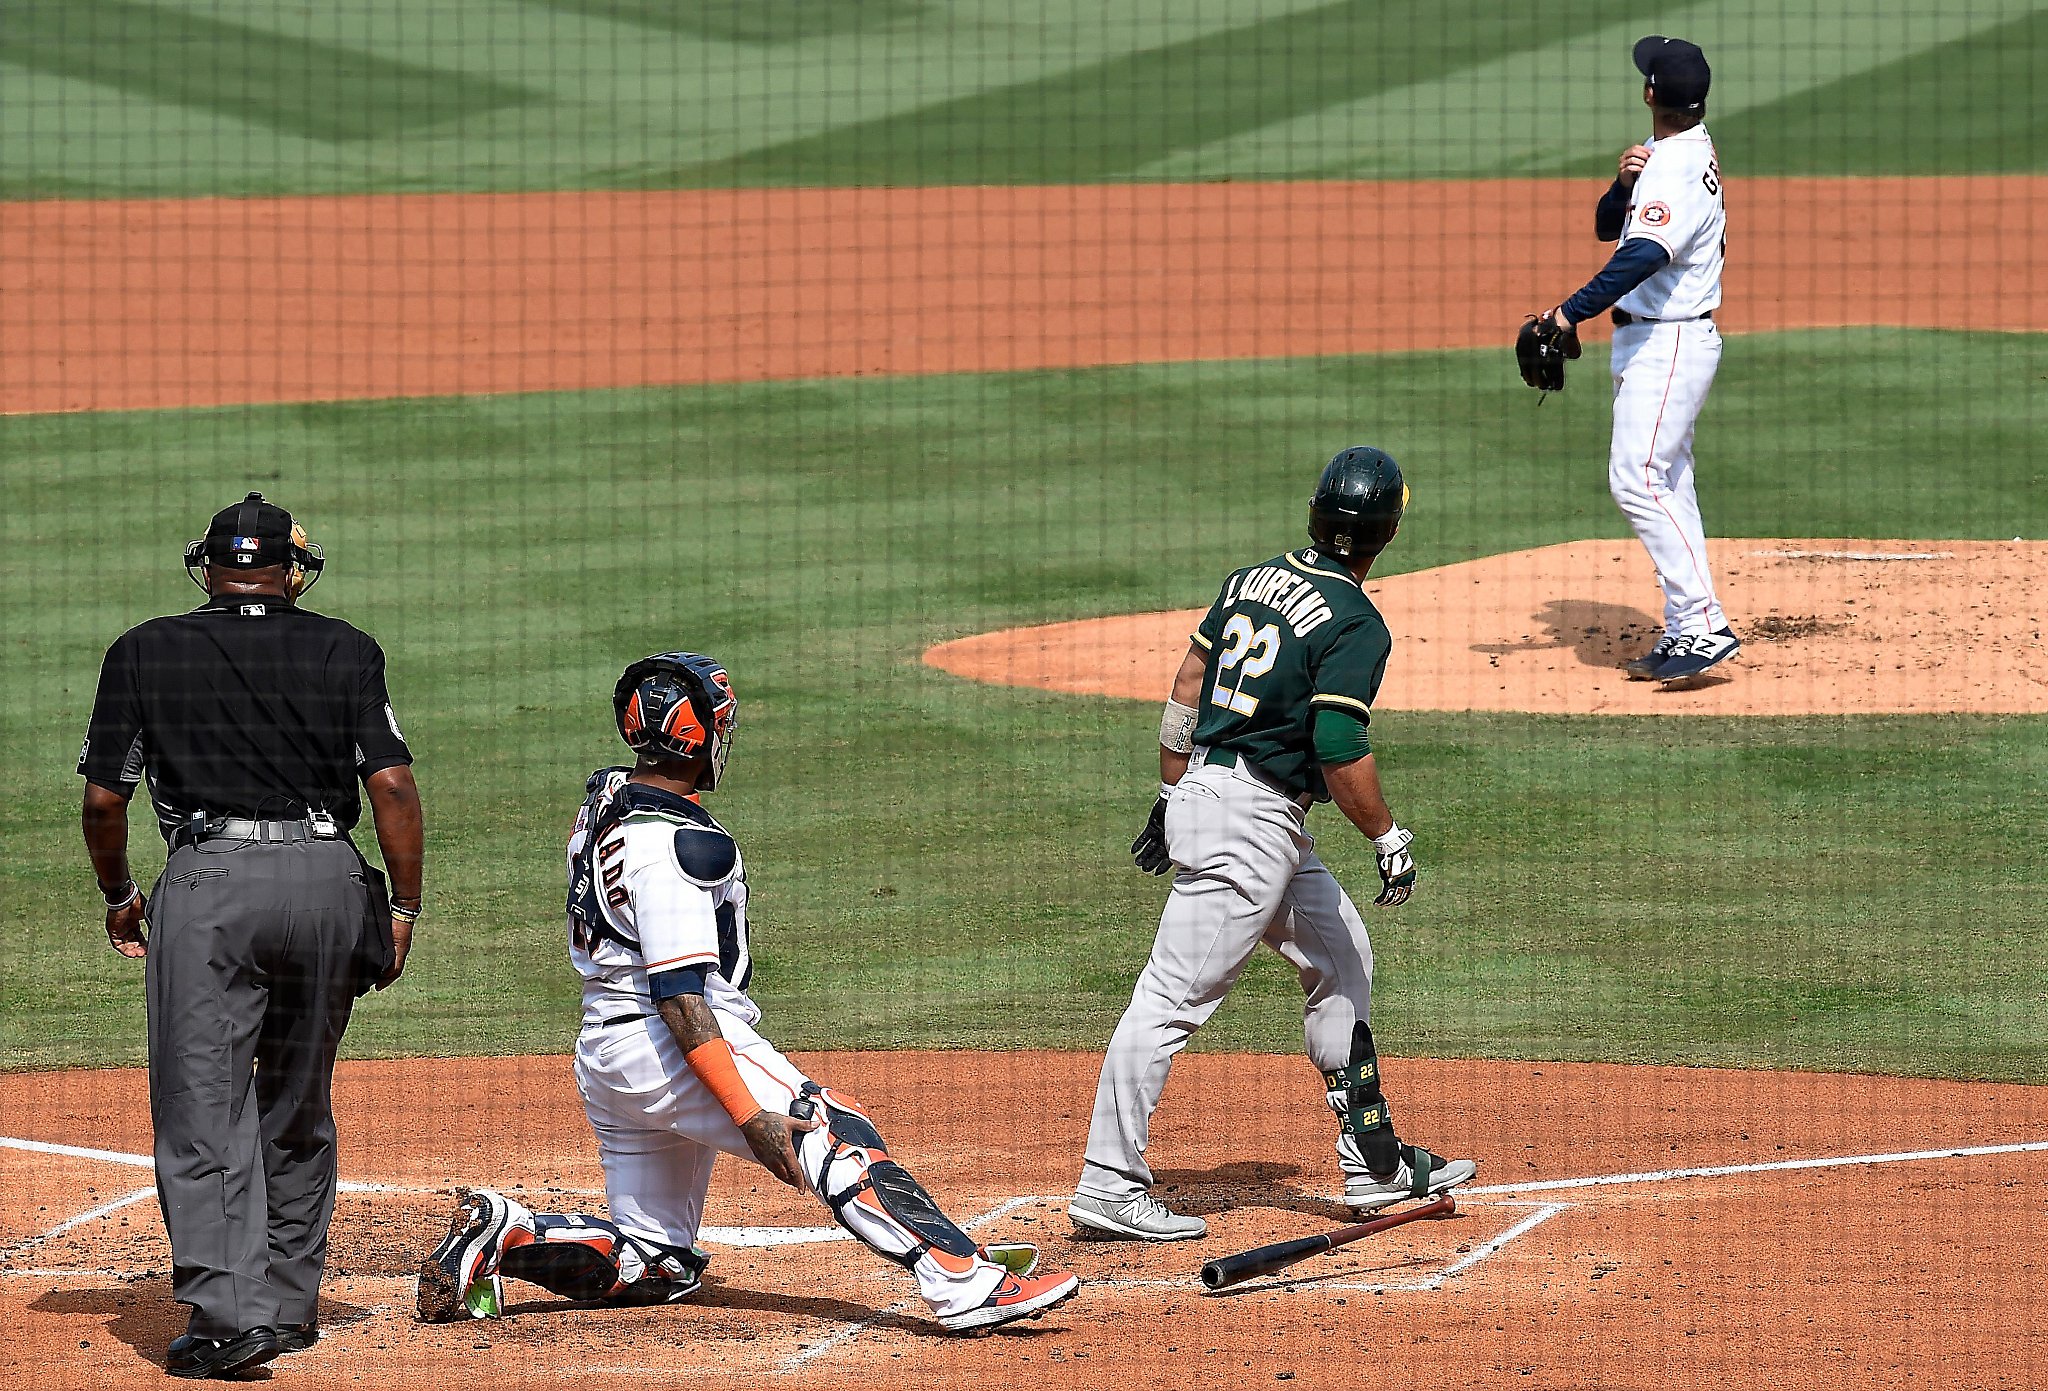 ZACK GREINKE WORLD SERIES HIT!! Astros' pitcher smacks single in